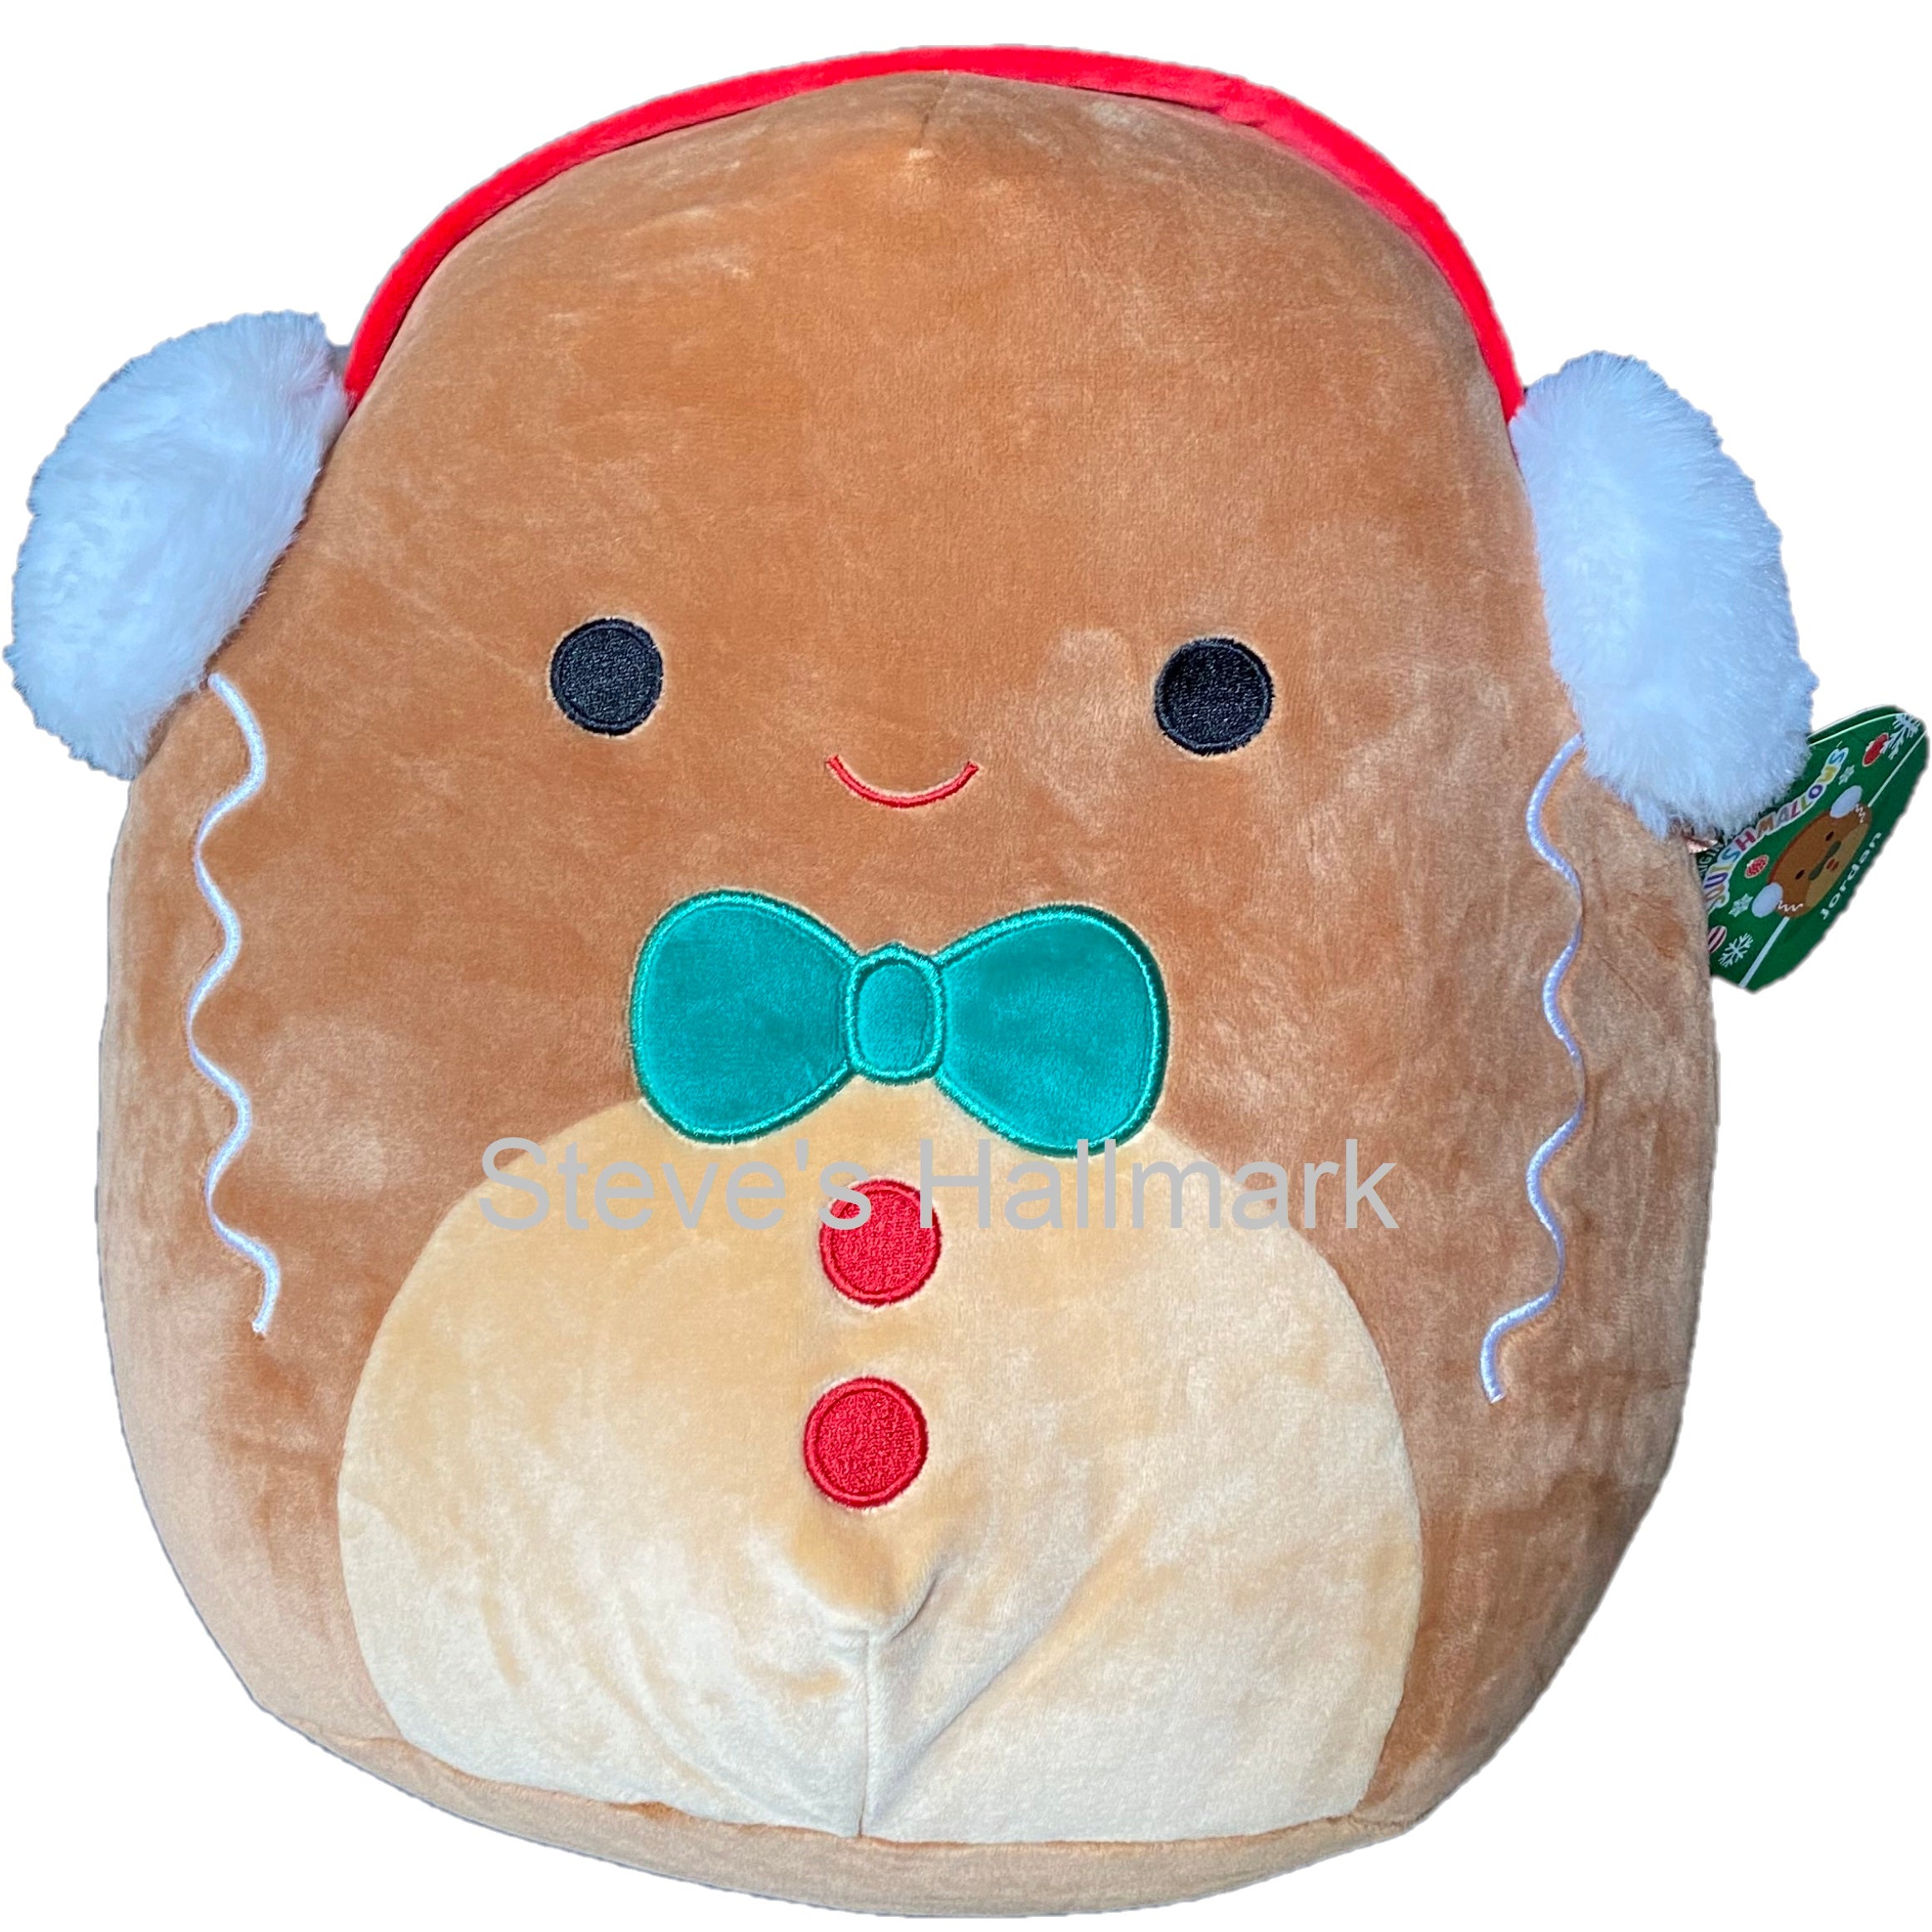 Kelly Toy Squishmallows 16'' Christmas 2021 Jordan Gingerbread New Kellytoy